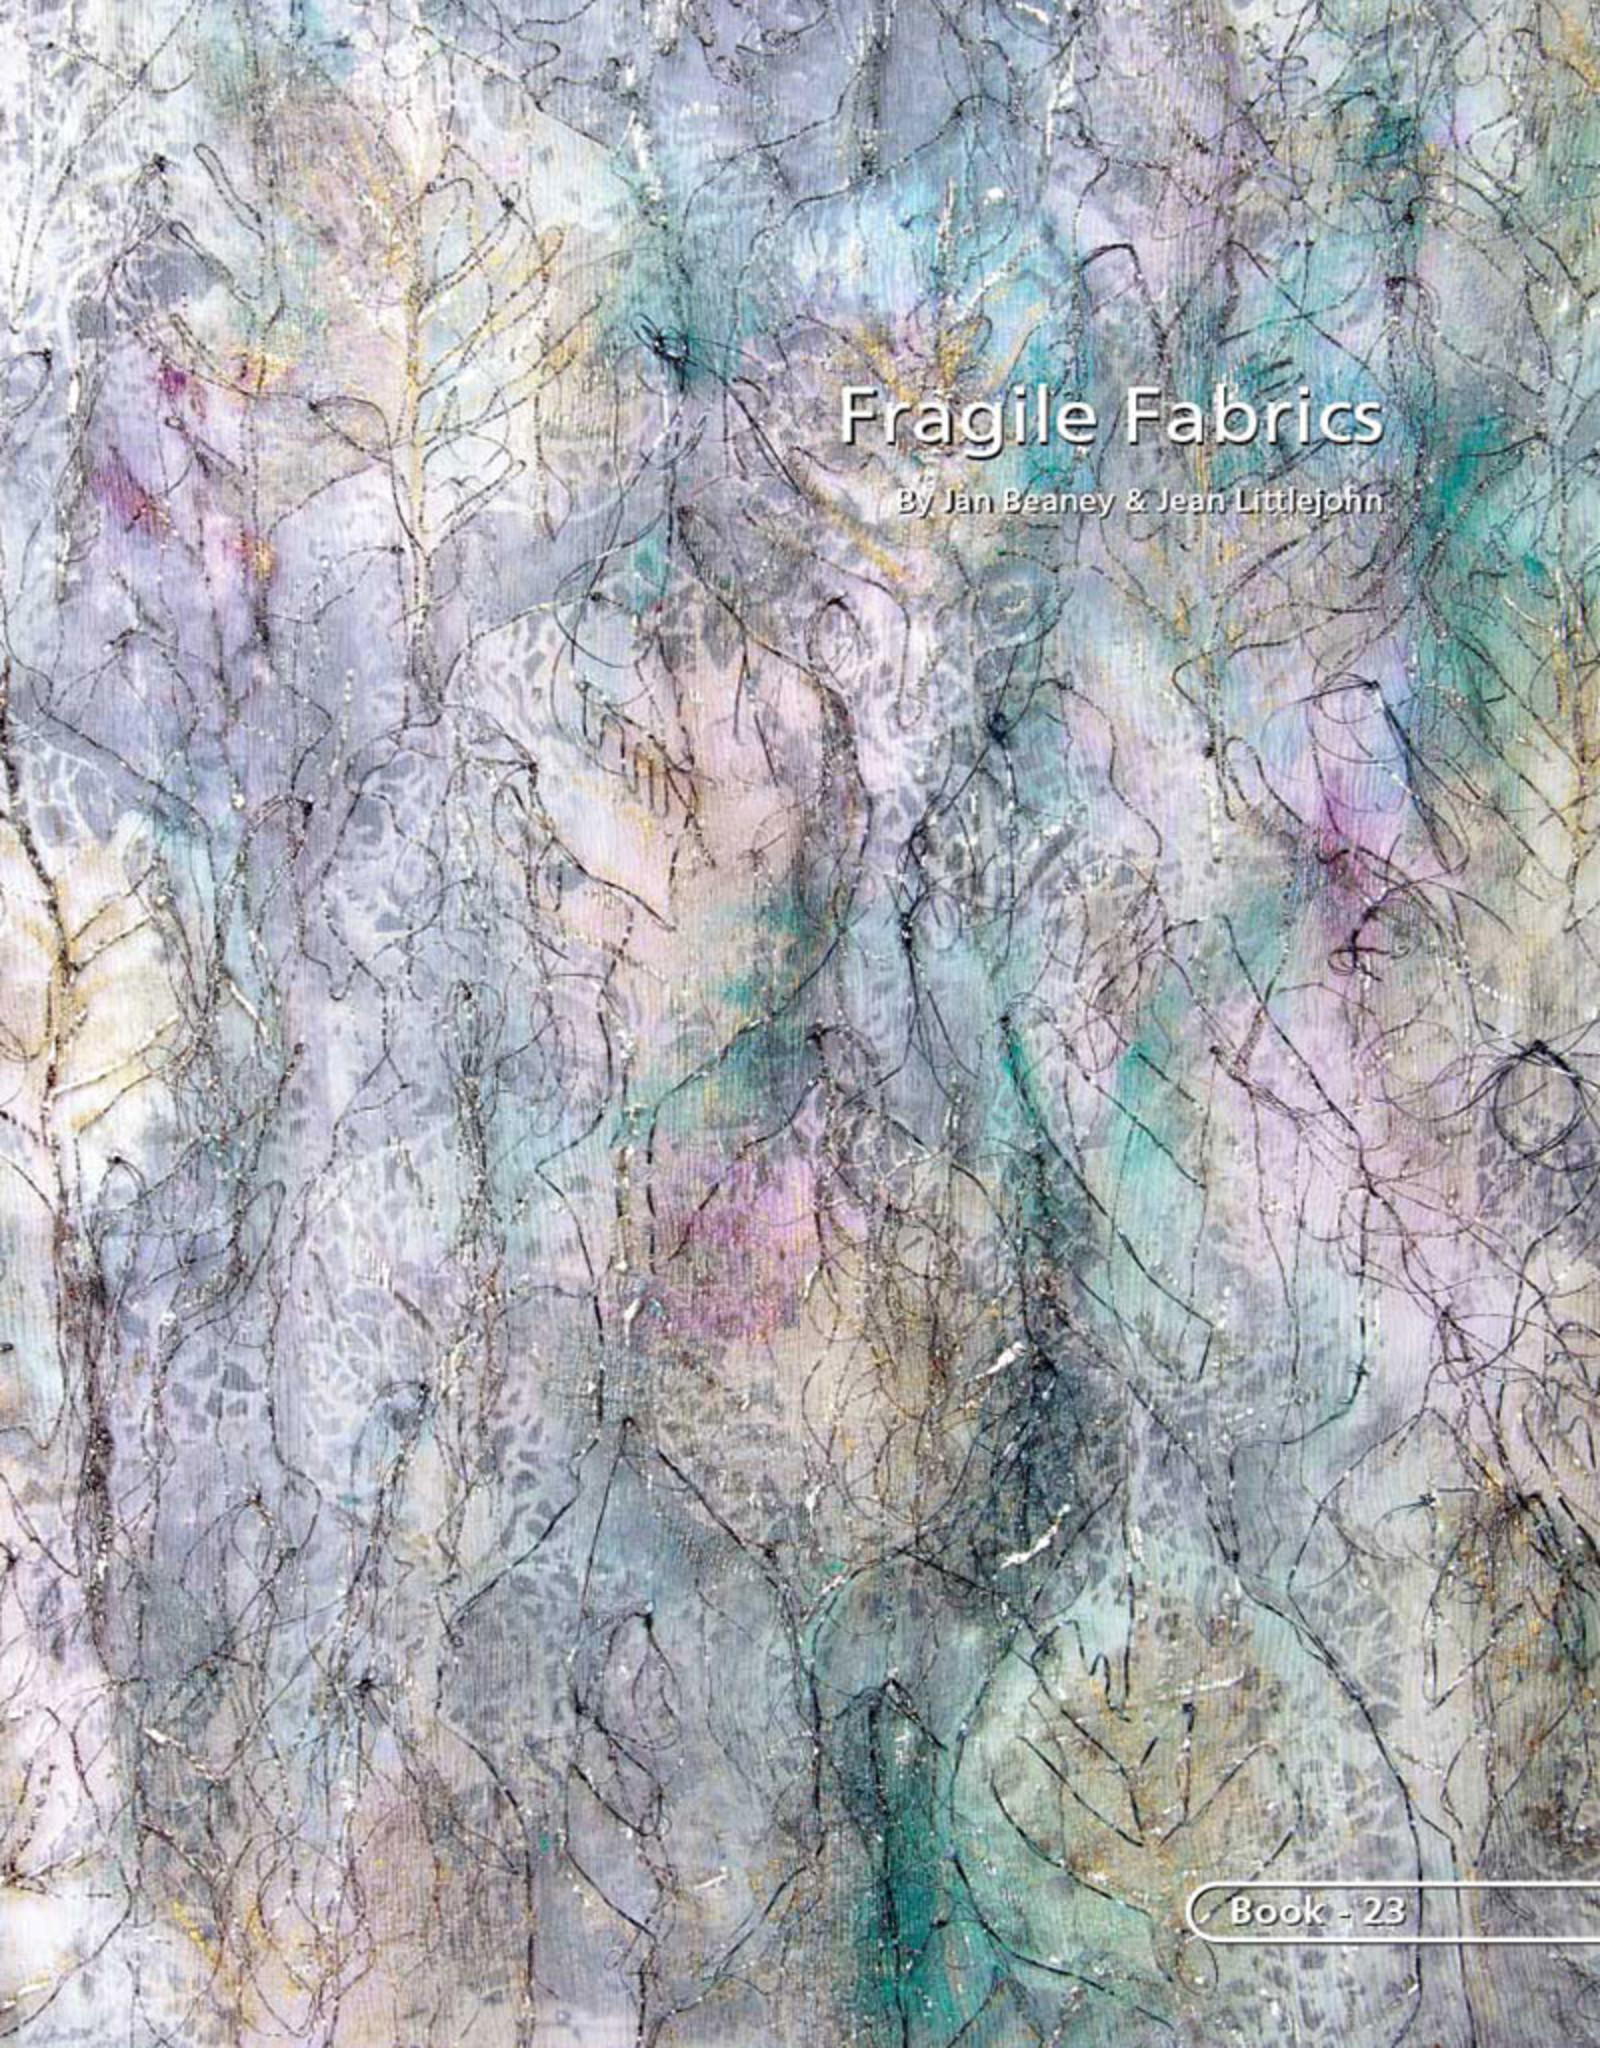 Fragile Fabrics / Jan Beaney & Jean Littlejohn